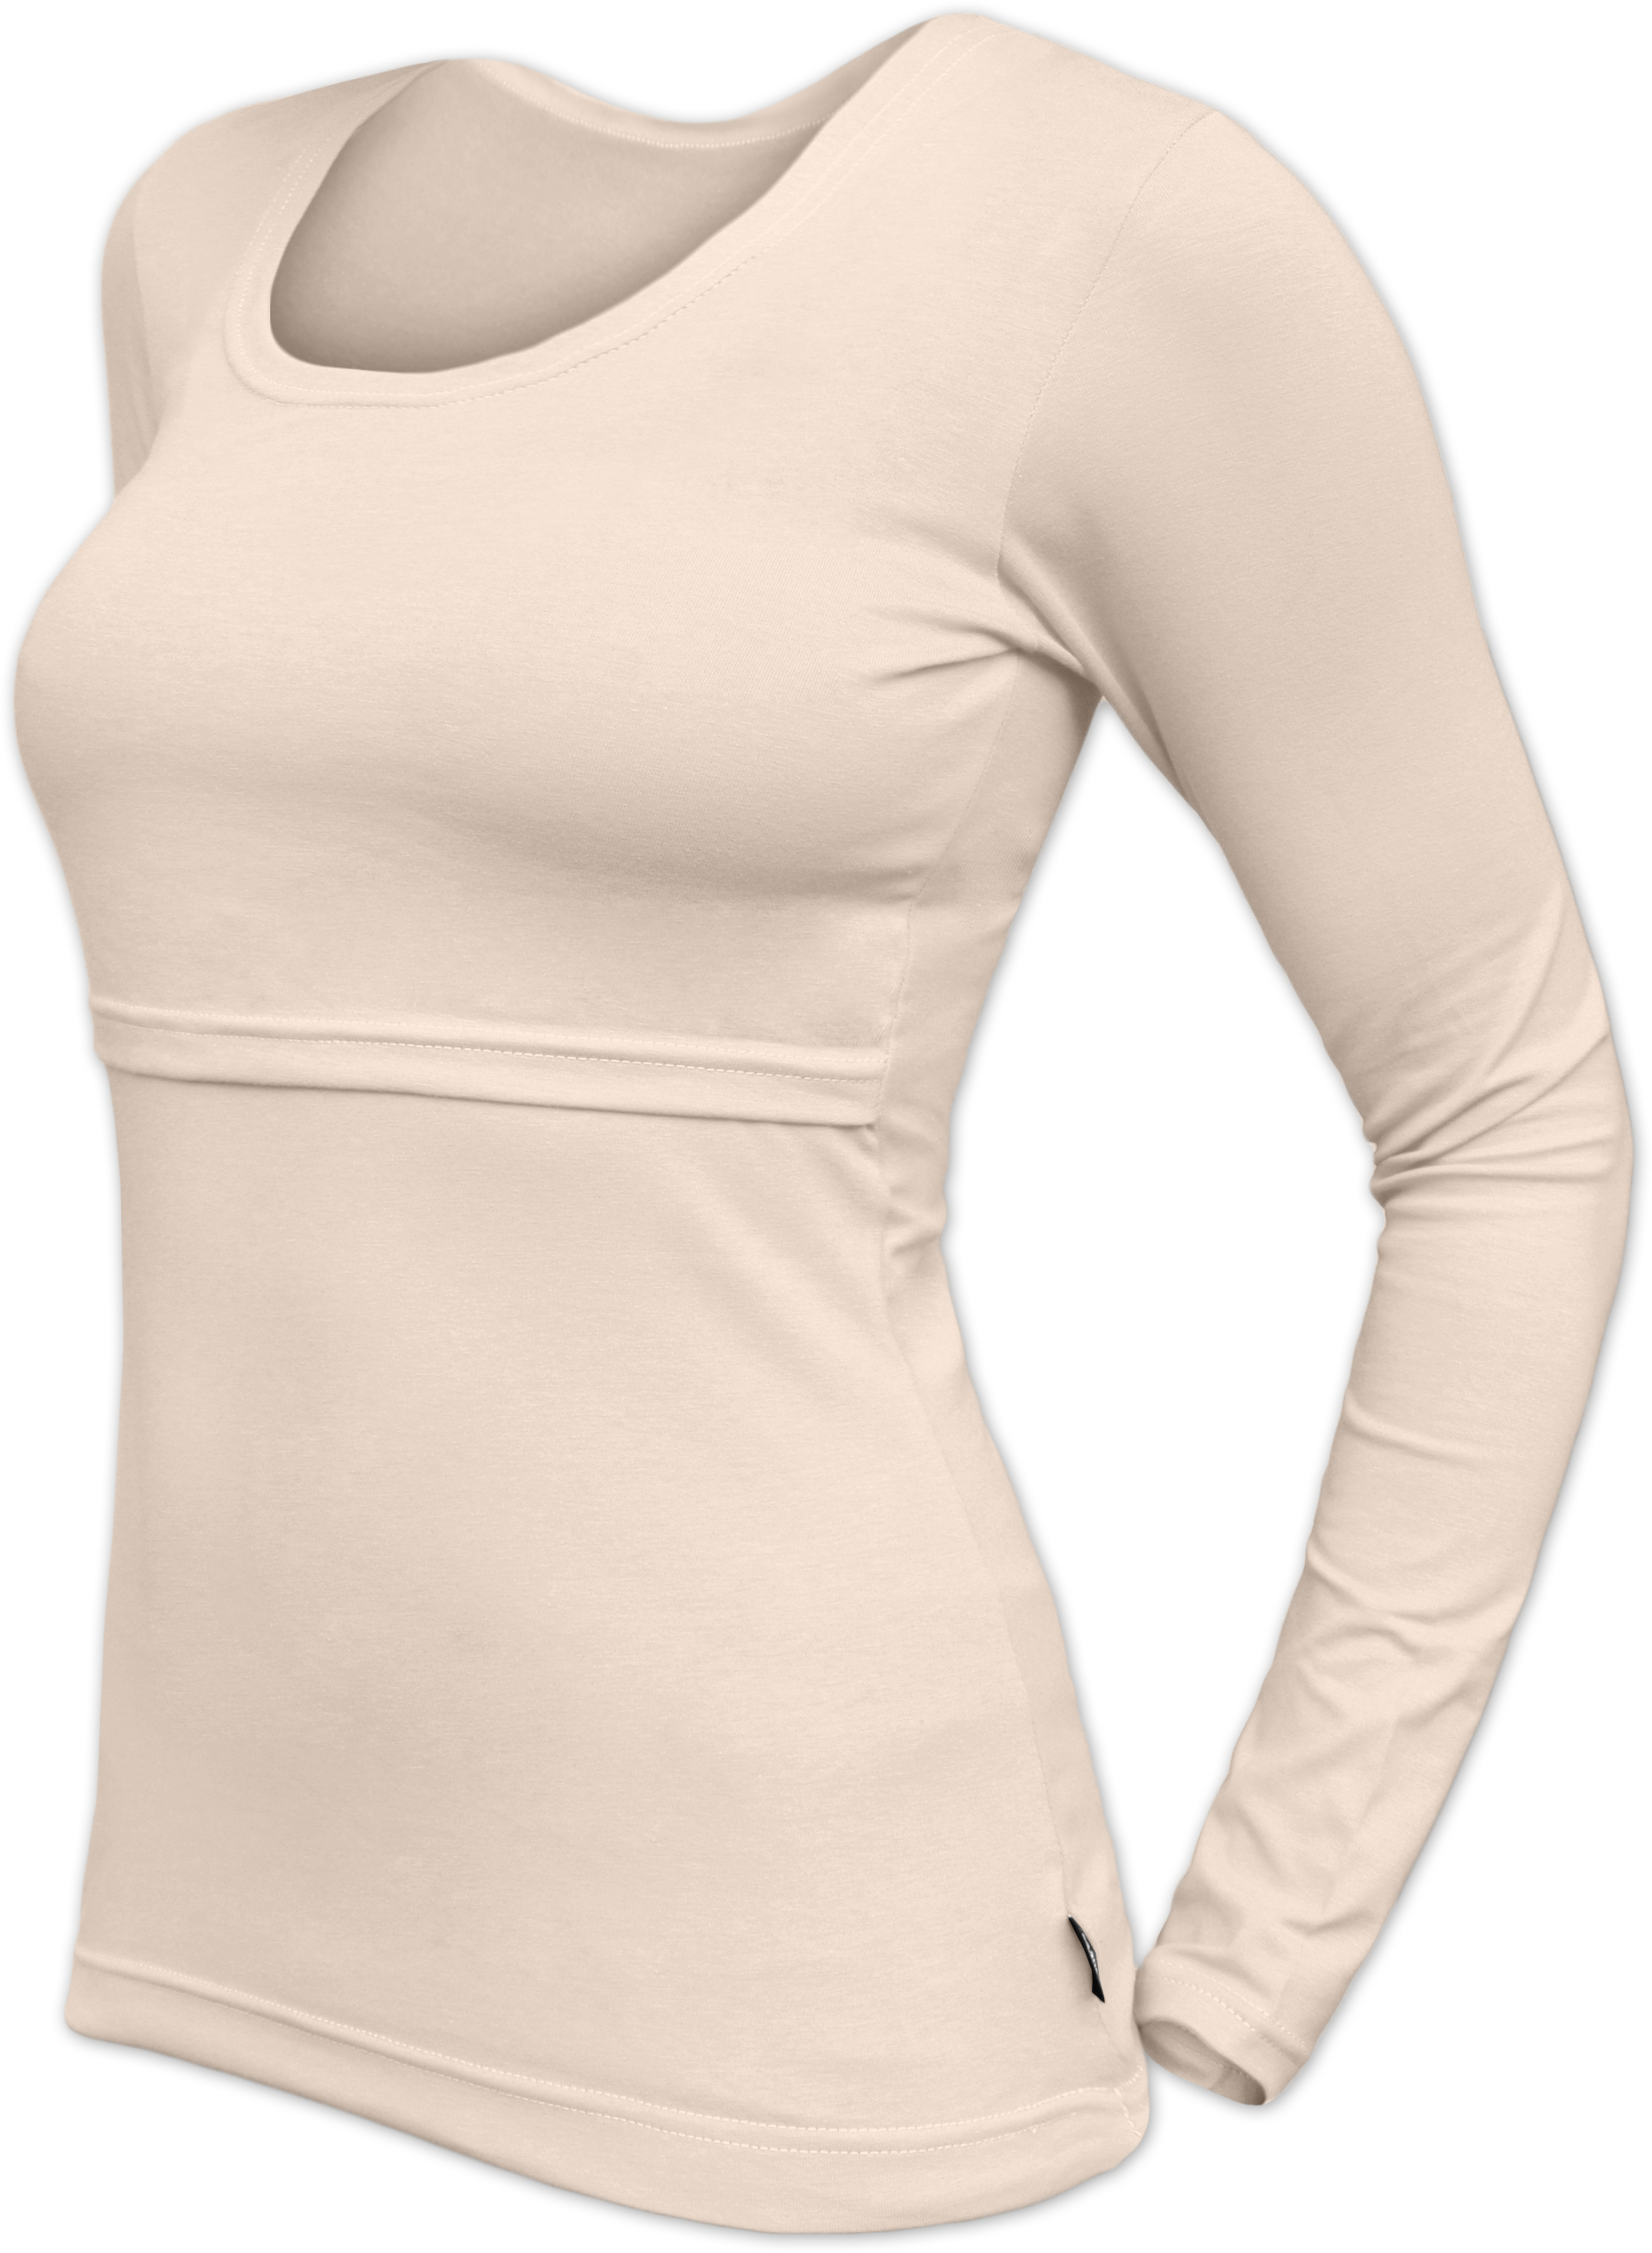 KATERINA- breast-feeding T-shirt, long sleeves, CAFFE LATTE S/M